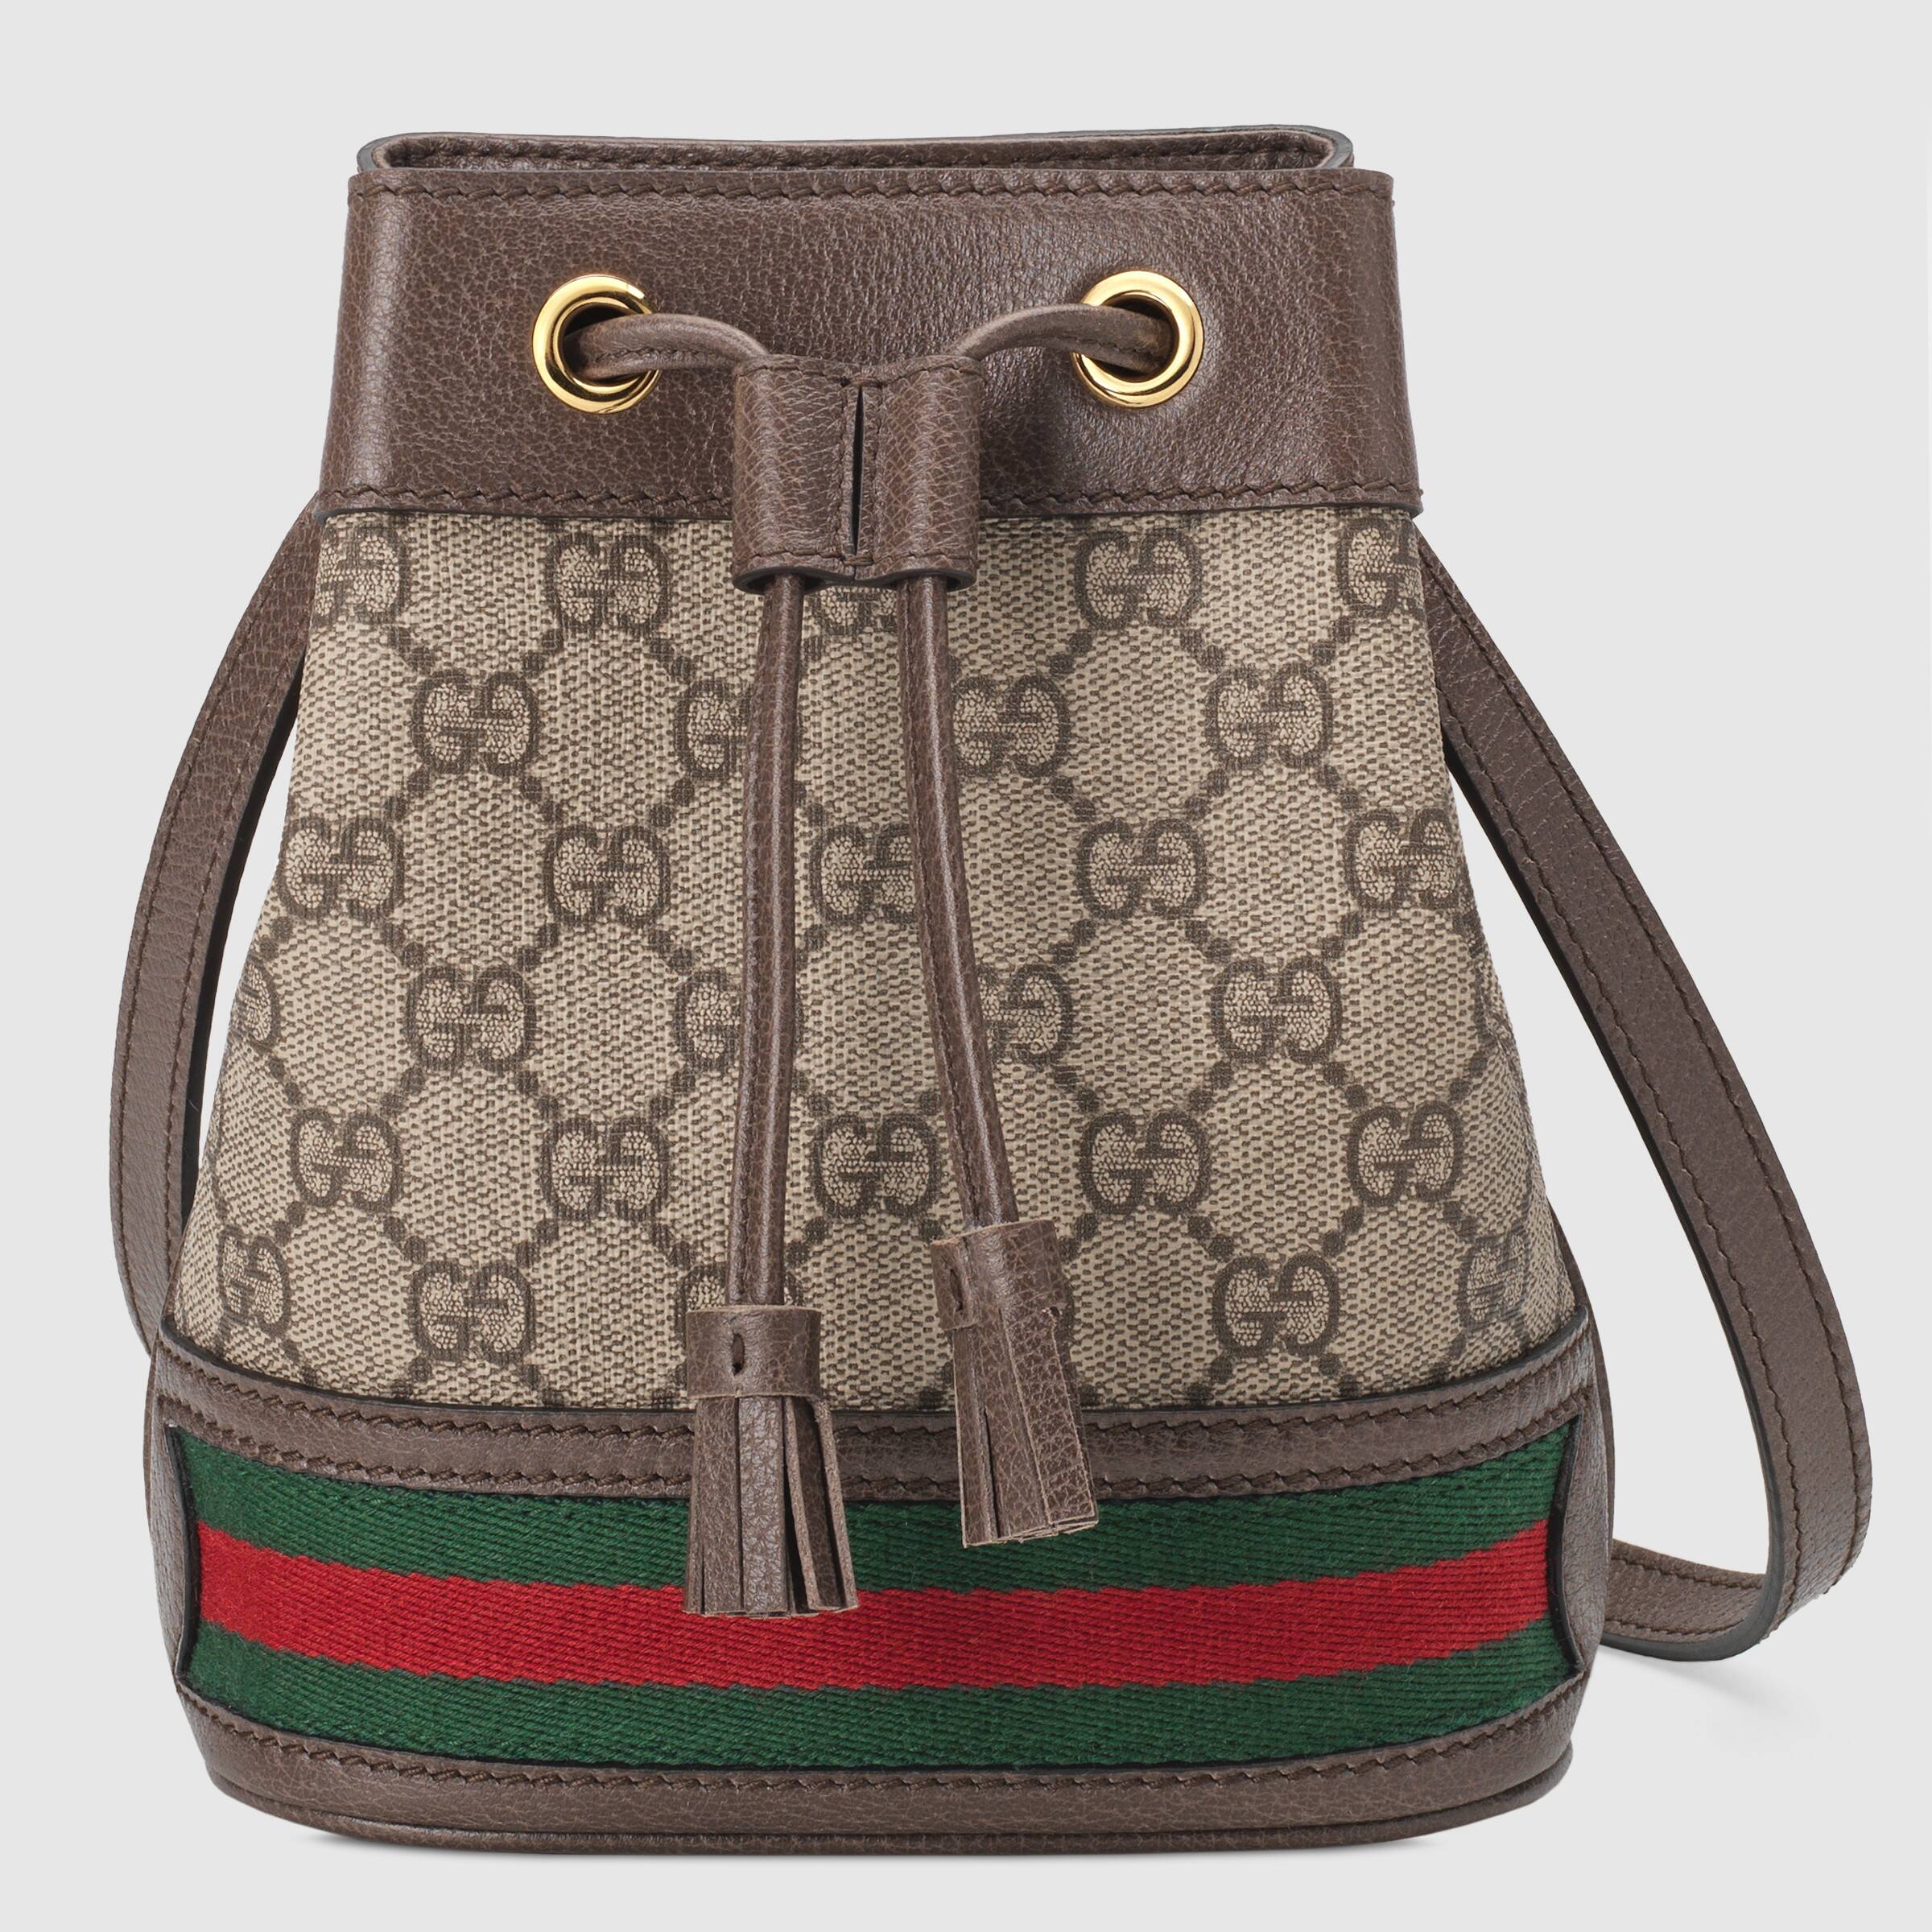 Gucci Mini GG Bucket Bag